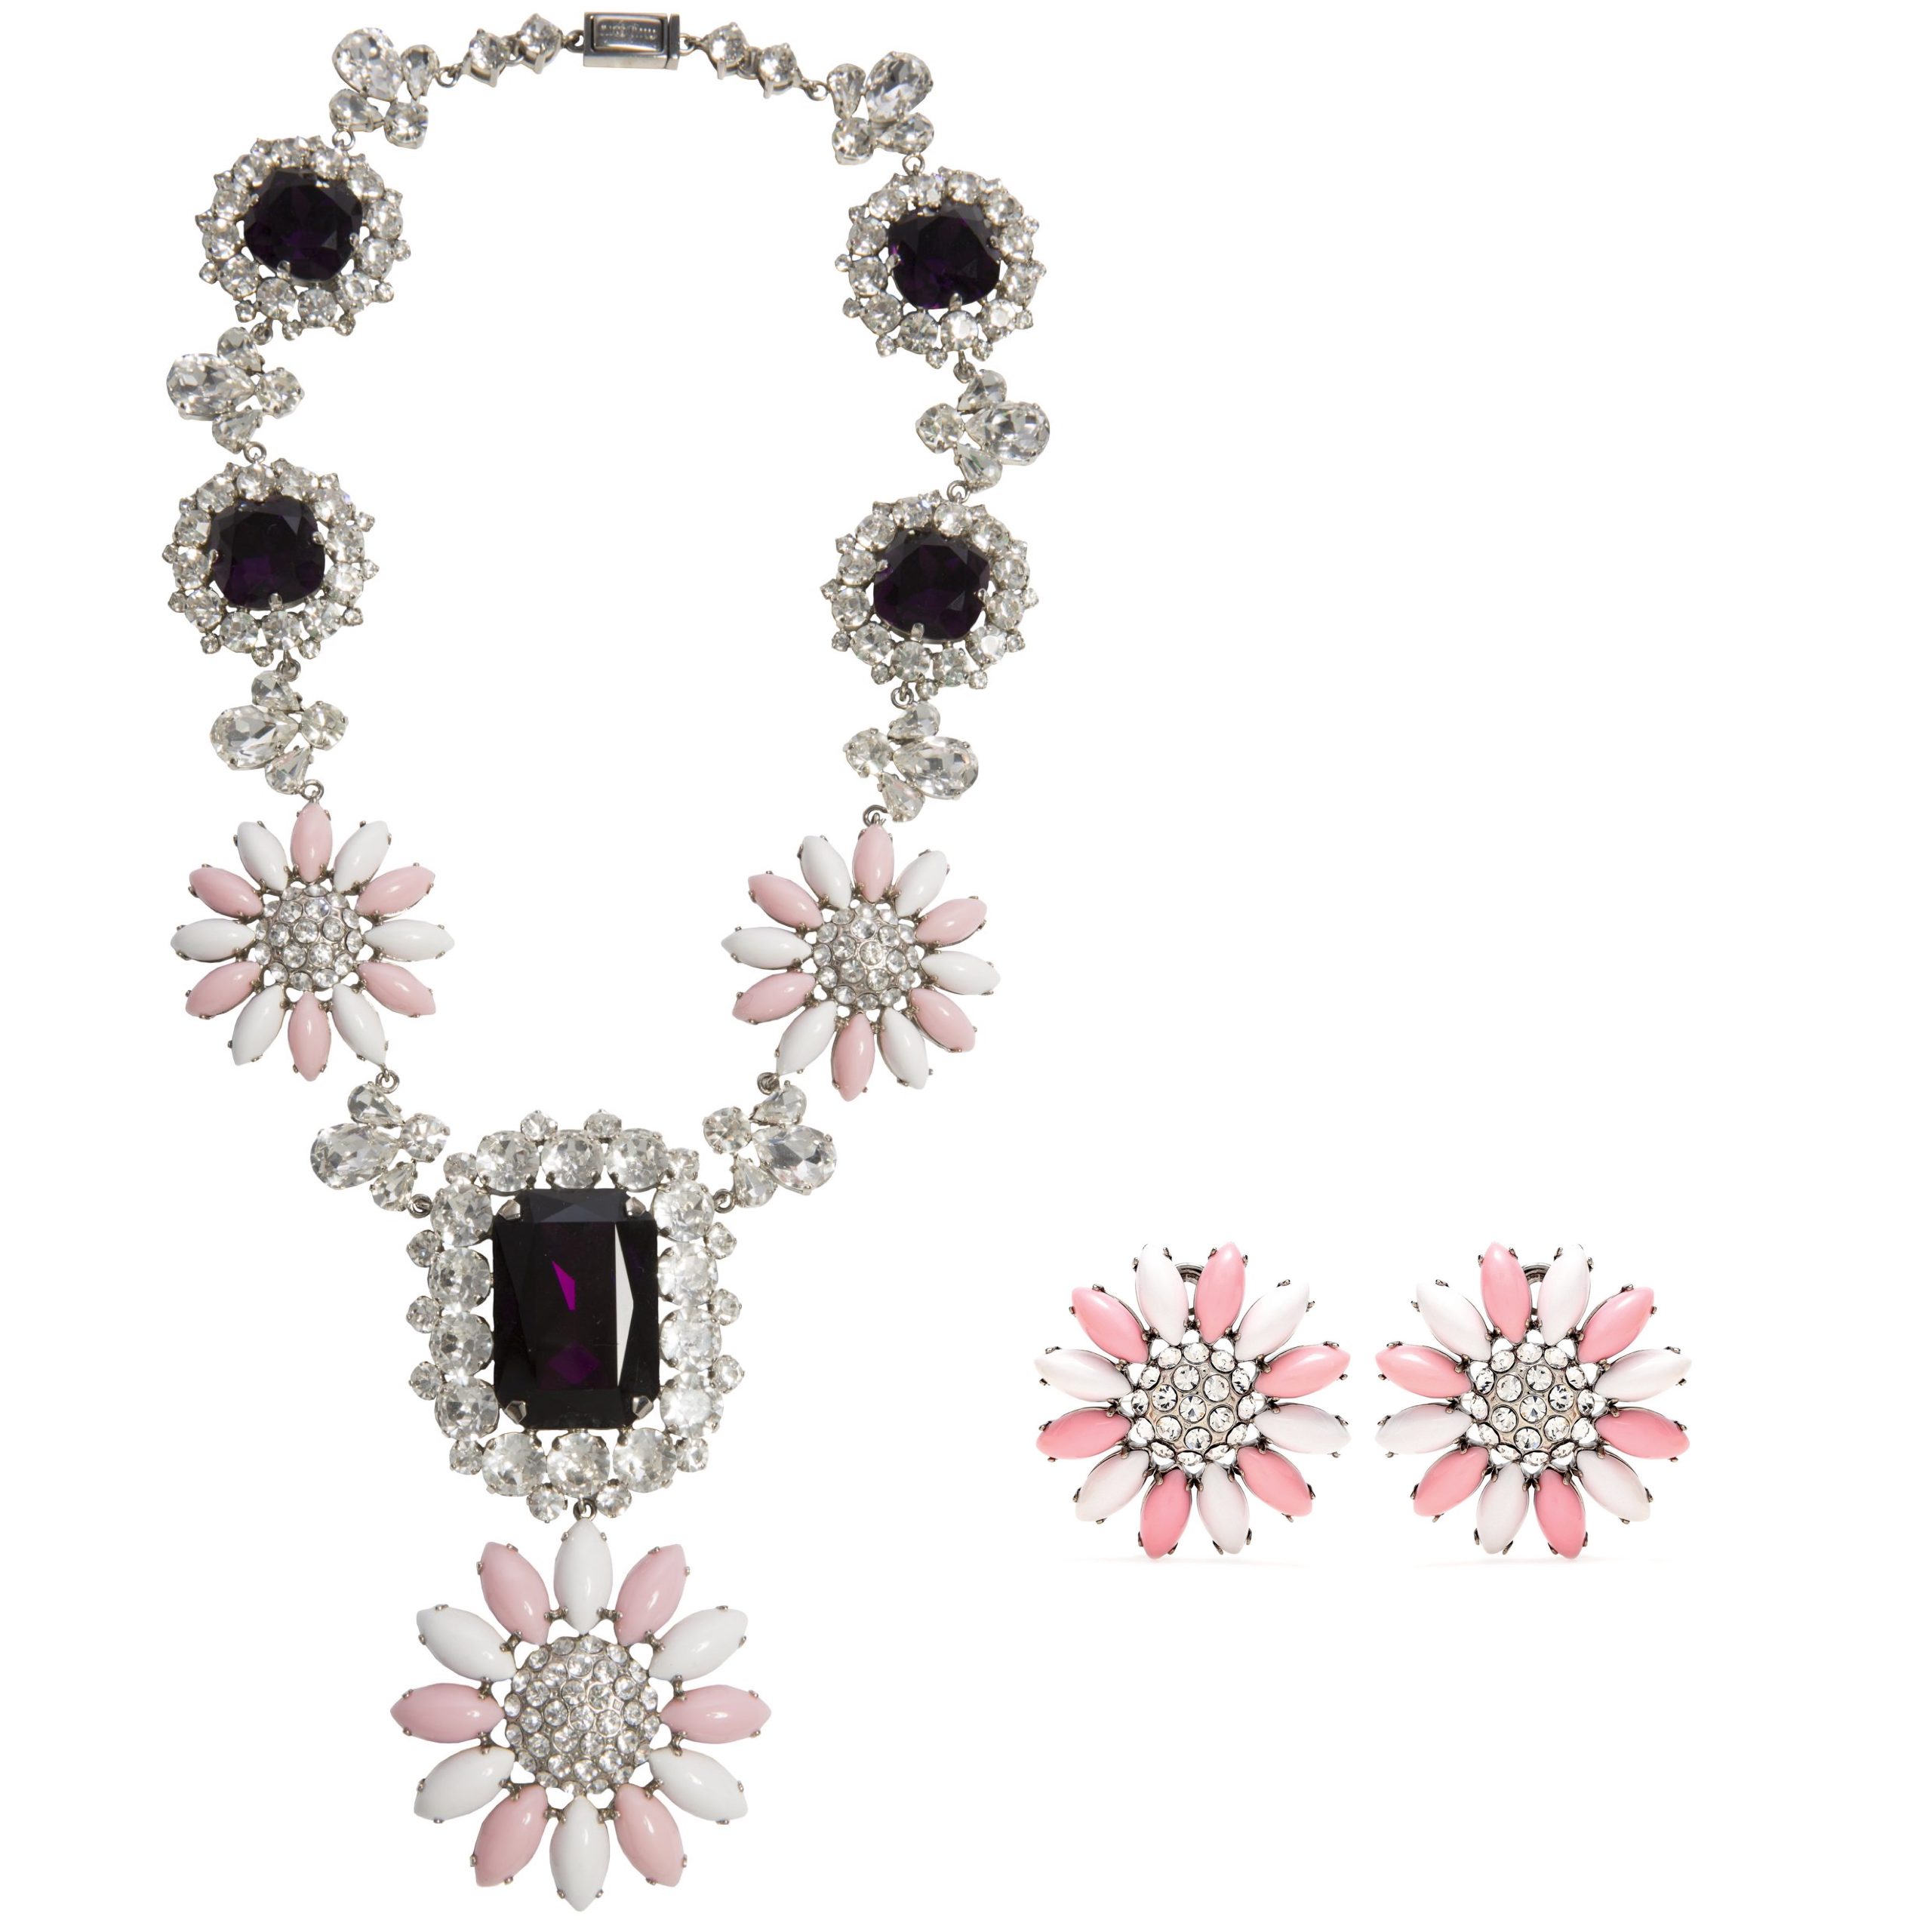 Pastel daisy crystal earrings set